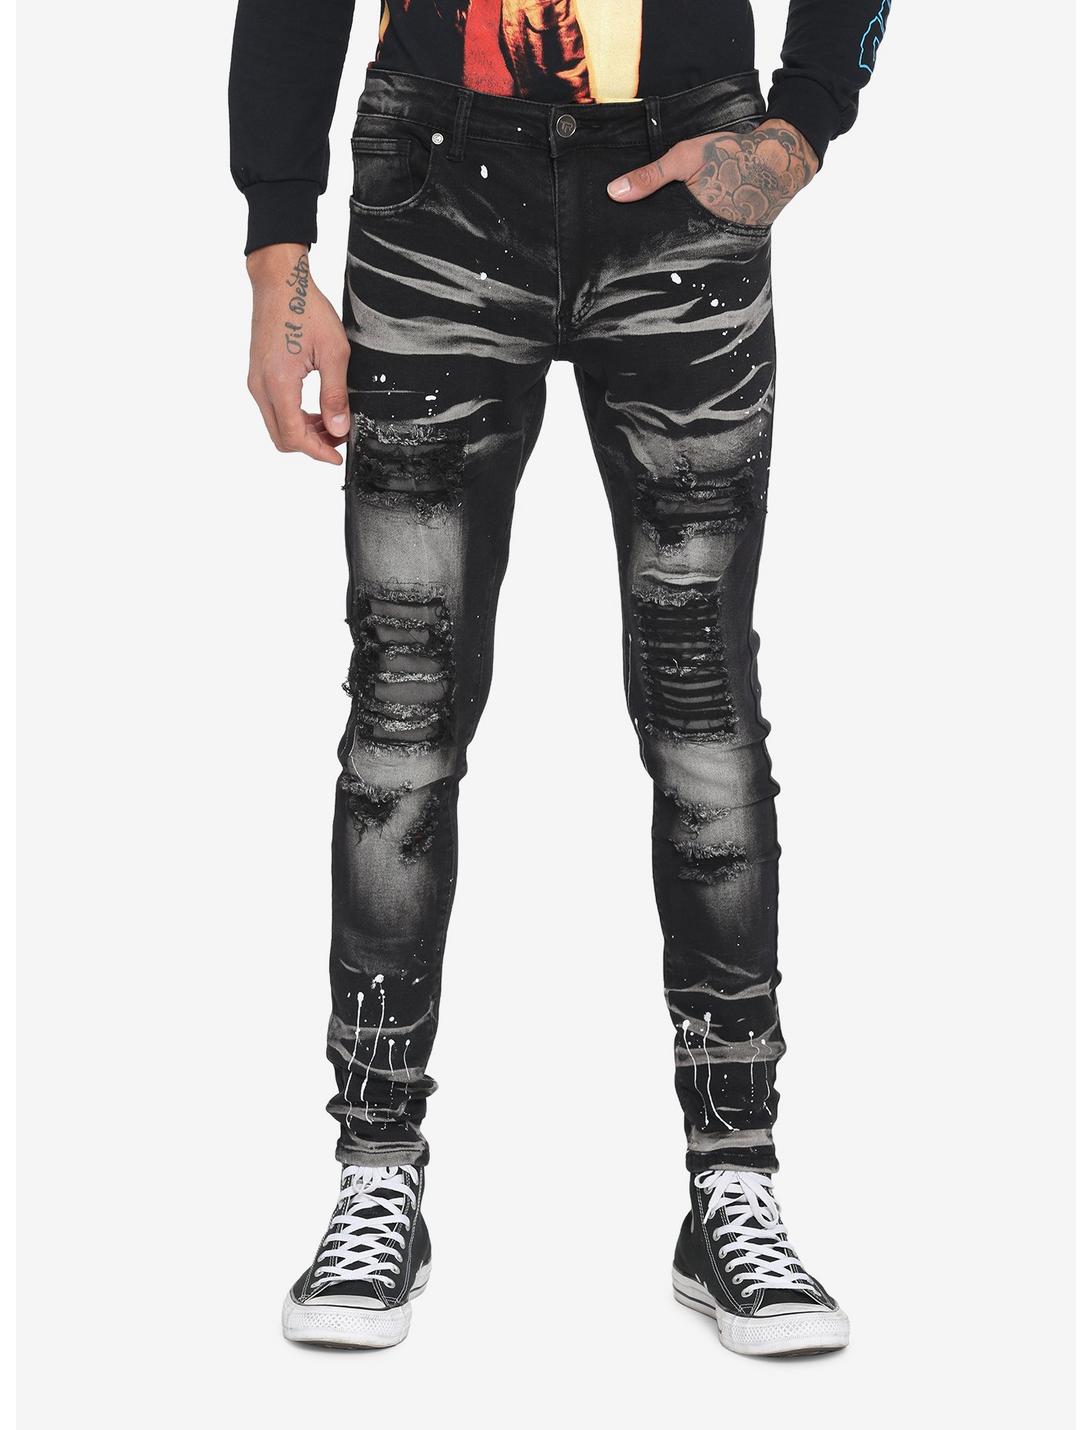 Black Paint Splatter Distressed Skinny Jeans, BLACK, hi-res